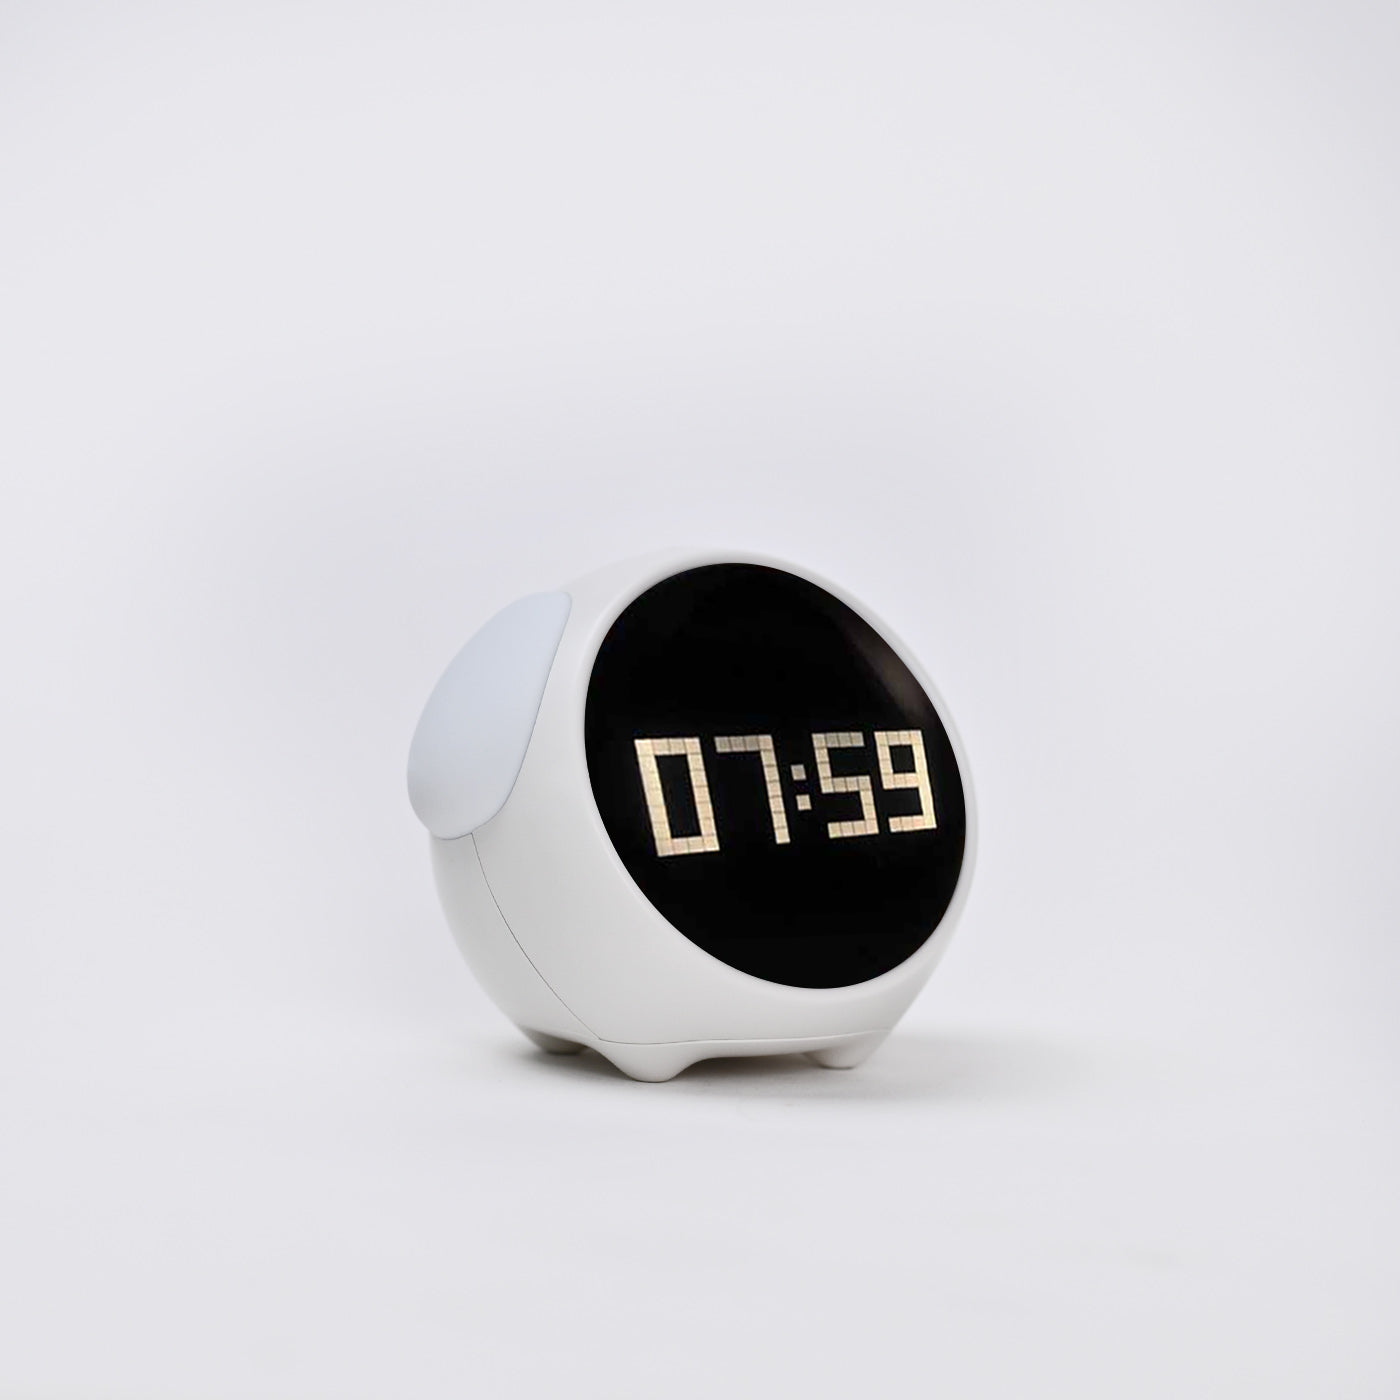 Cute Digital Emoticon Alarm Clock for kids & gifting purposes- White